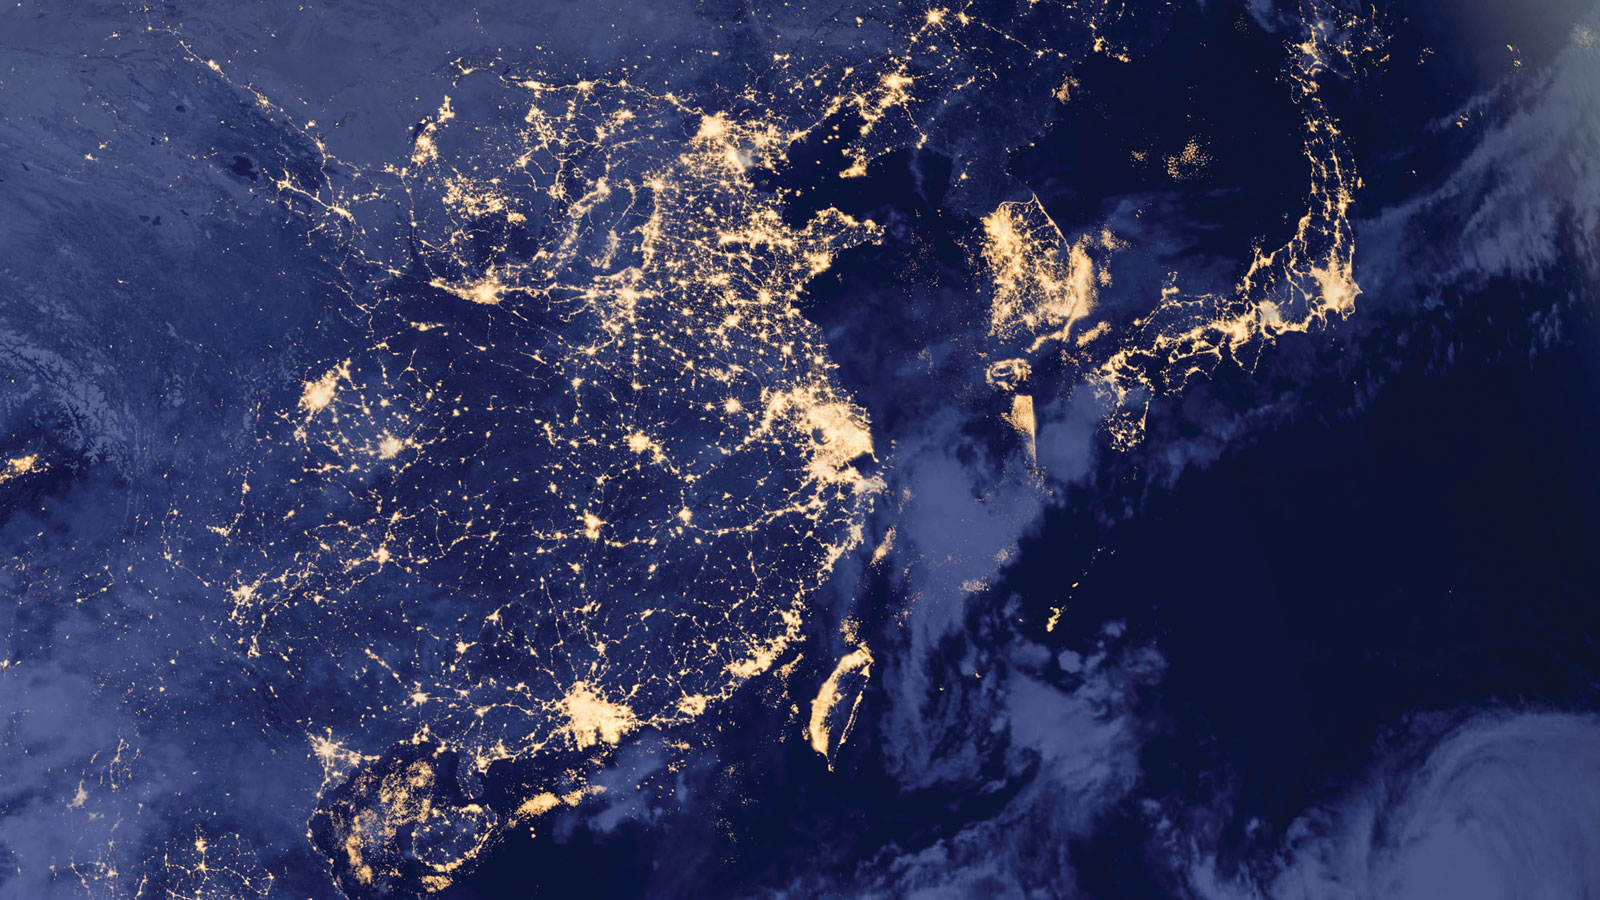 Illuminating Economic Growth Using Satellite Images Imf F D